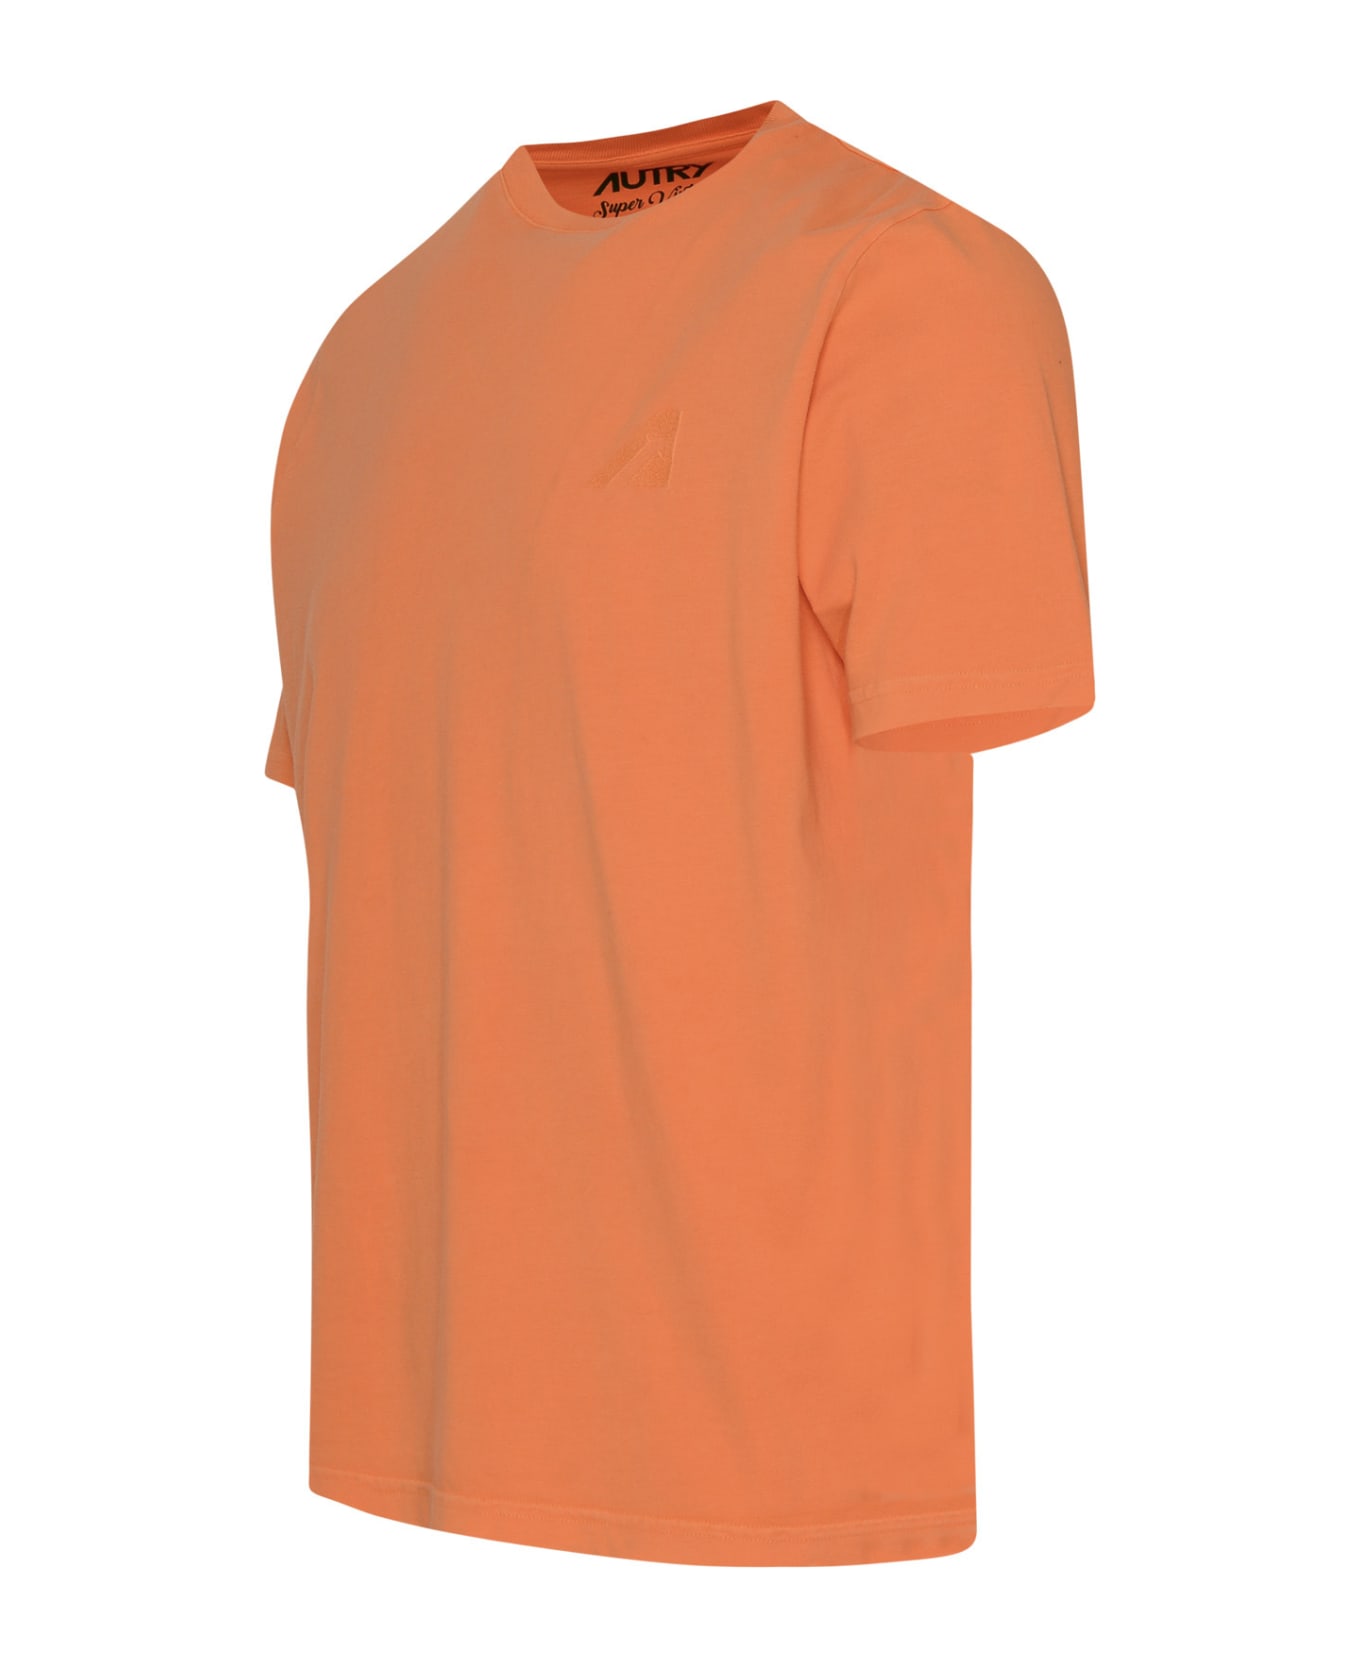 Autry Orange Cotton T-shirt - Arancio